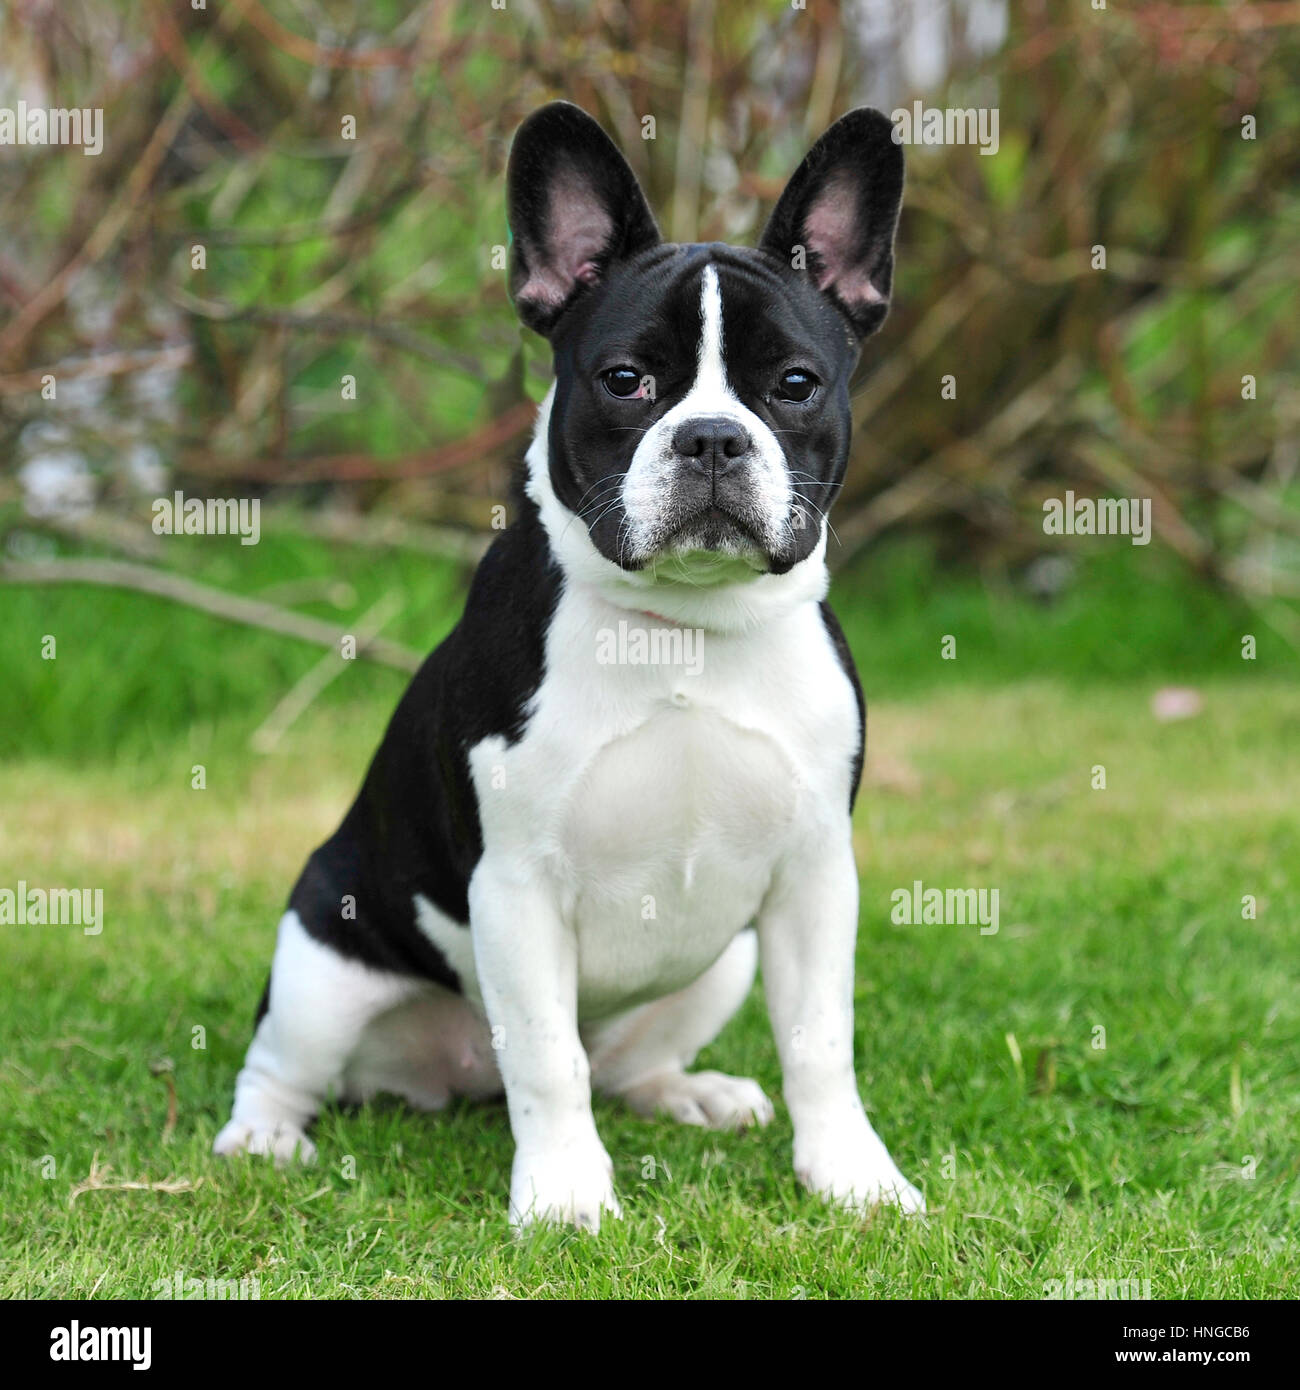 55+ French Bulldog Black And White